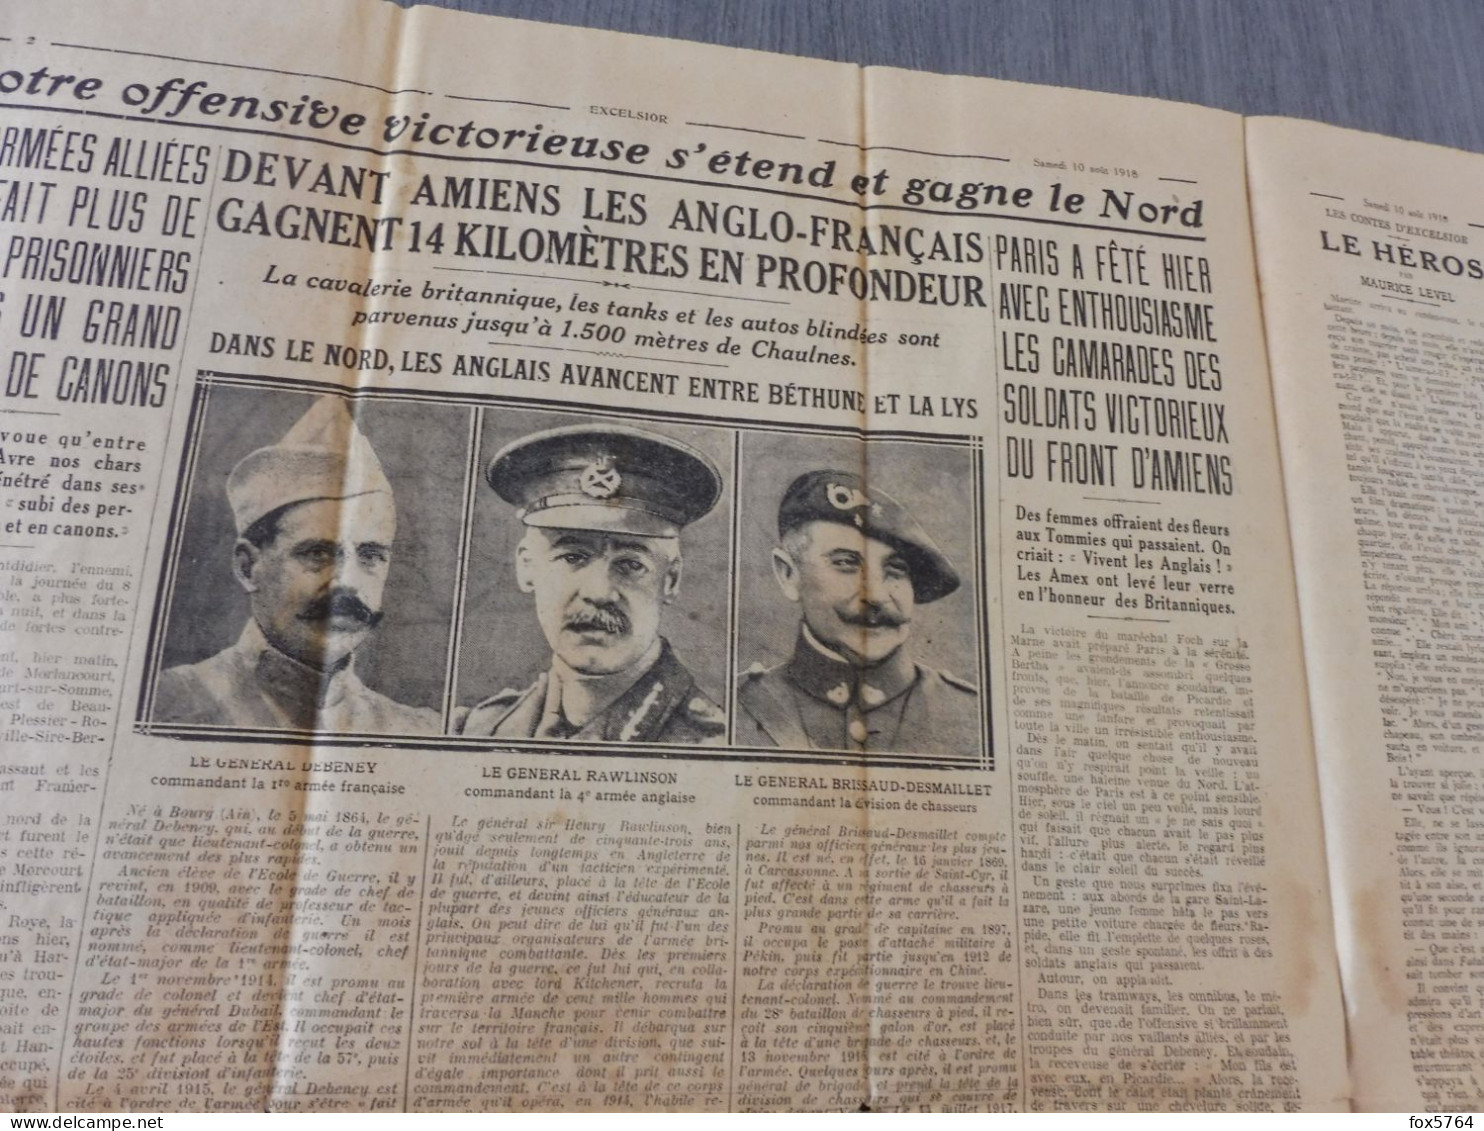 WW1 / JOURNAL DE GUERRE / EXCELSIOR / OFFENSIVE ALLIES 1918 / ORIGINAL 1918 - French